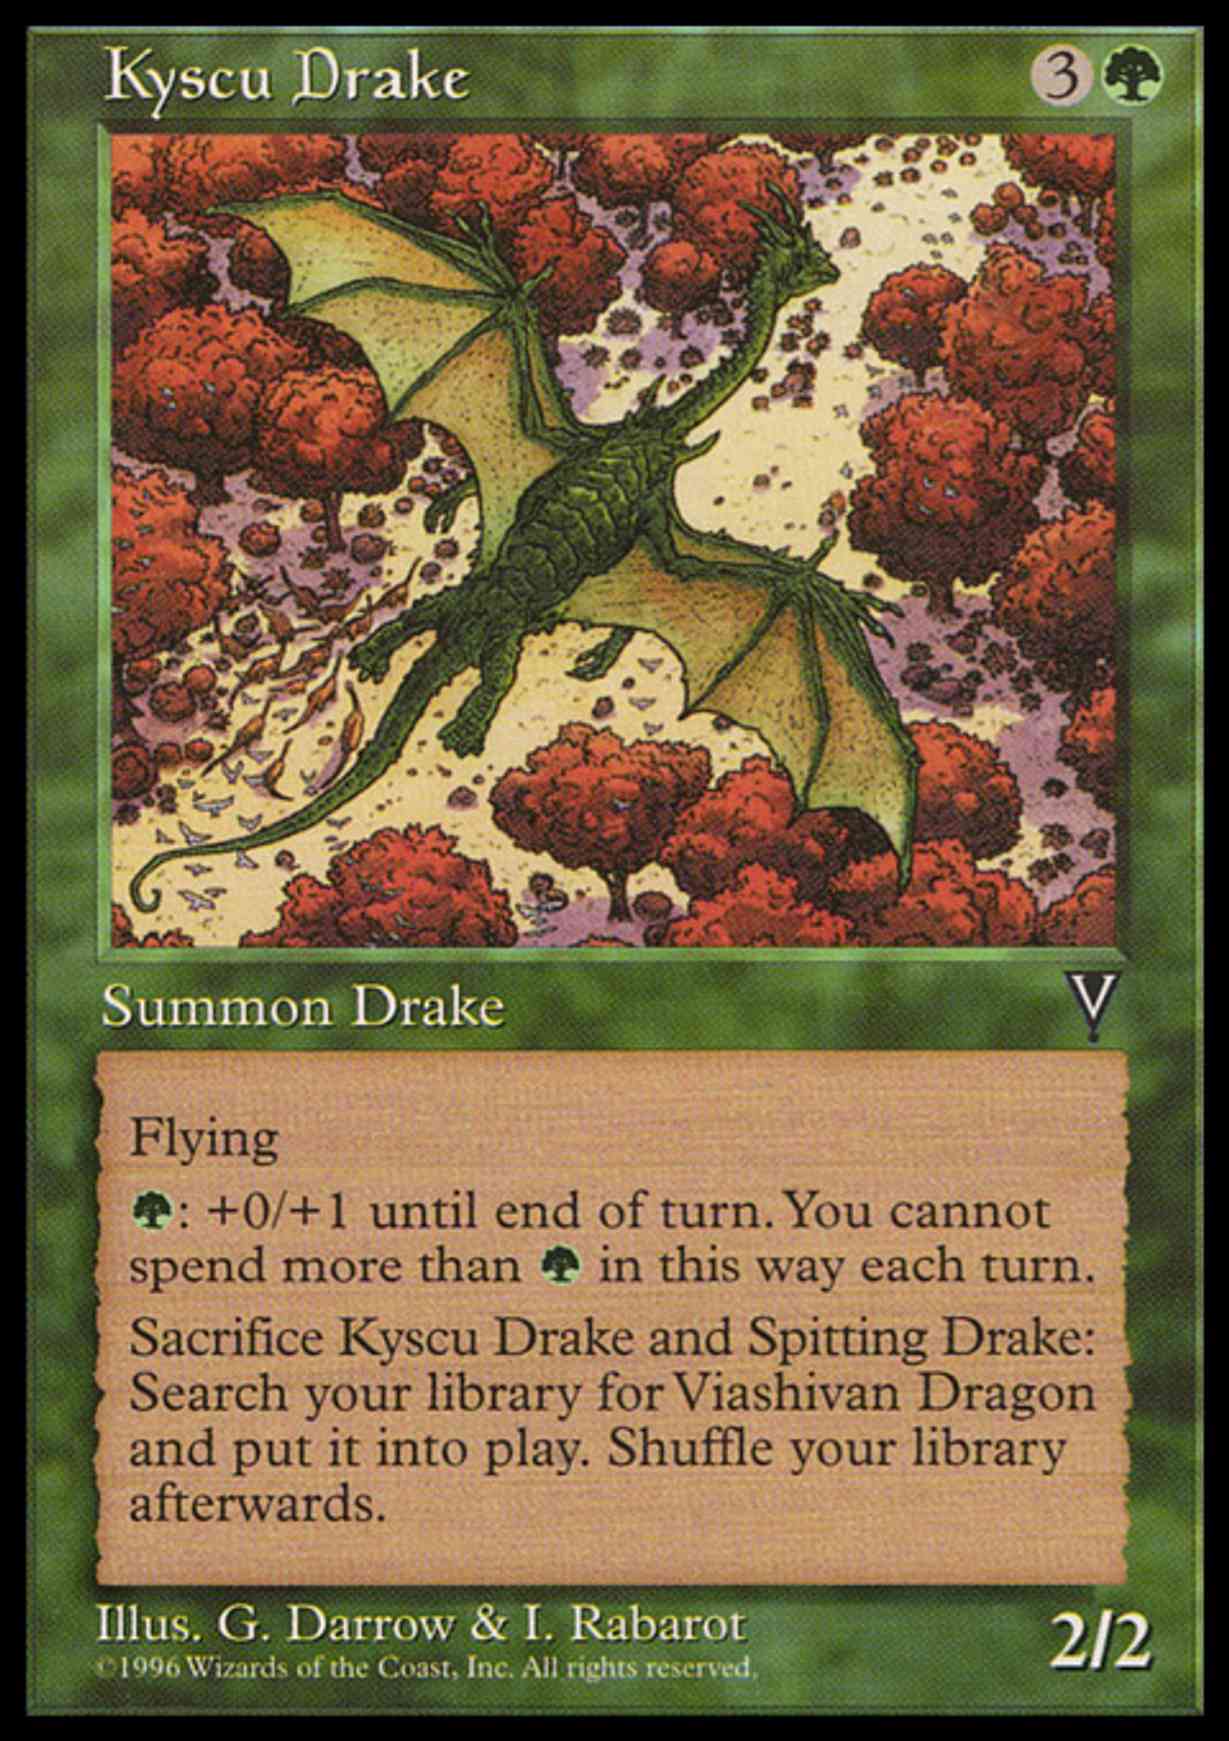 Kyscu Drake magic card front